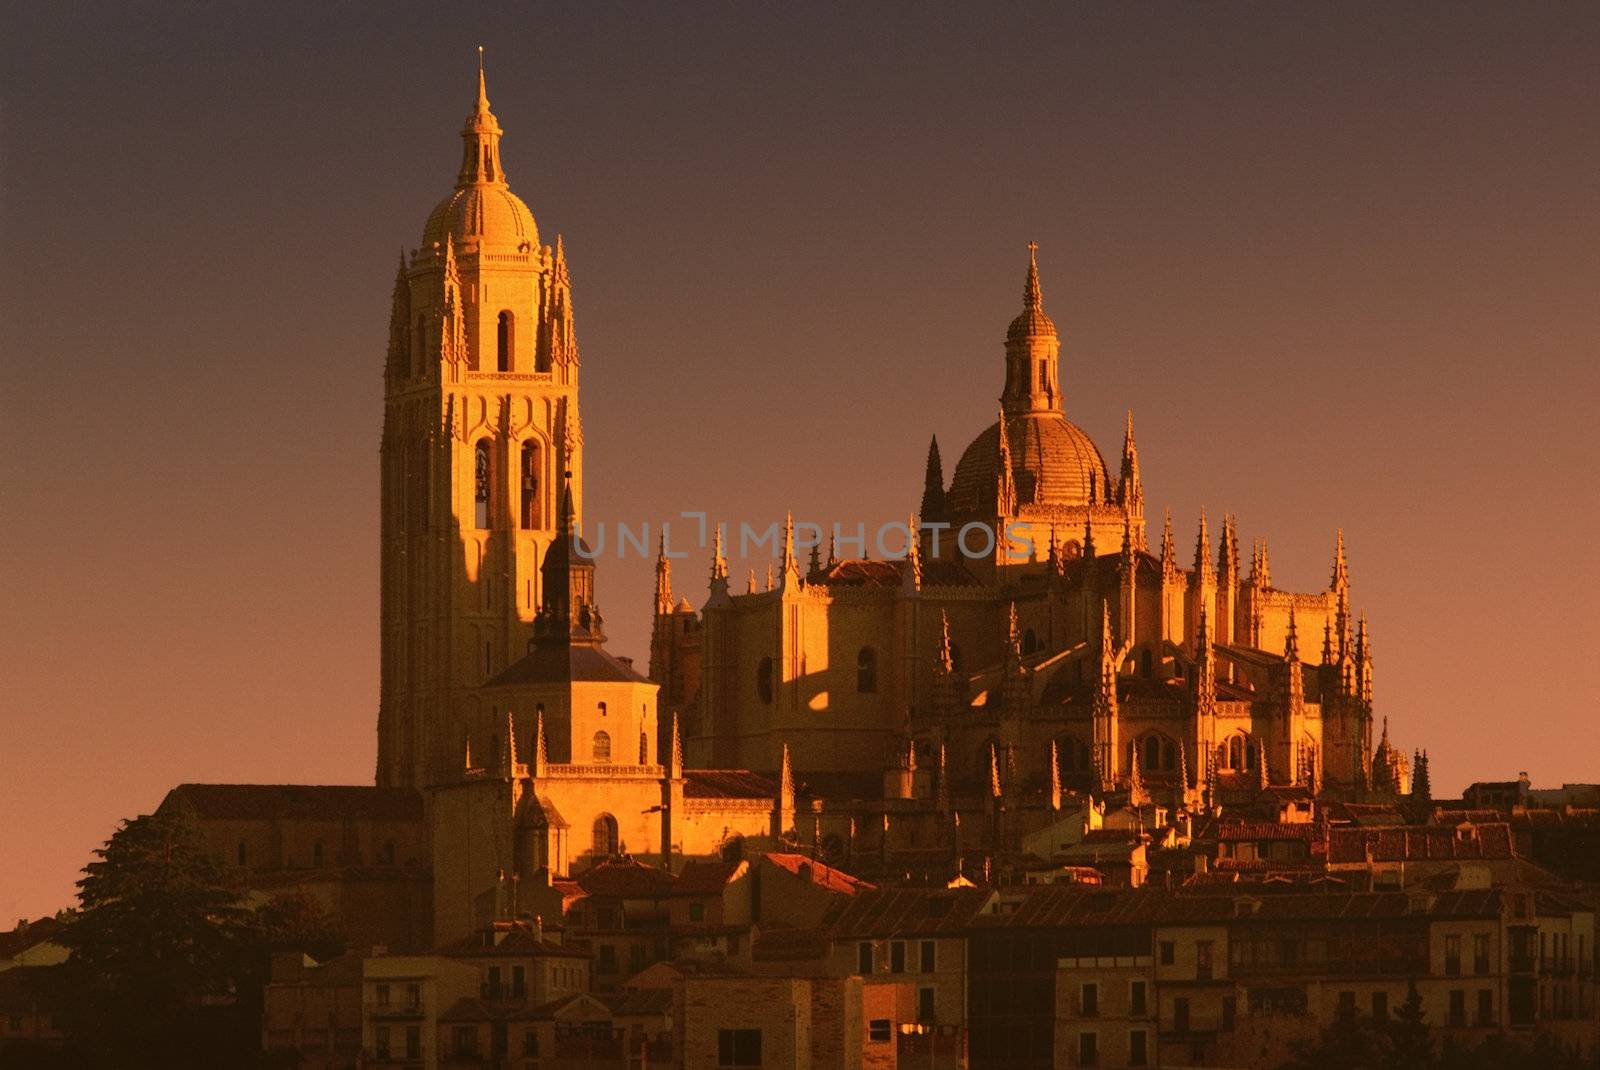 Cathedral de Segovia Spain by hotflash2001